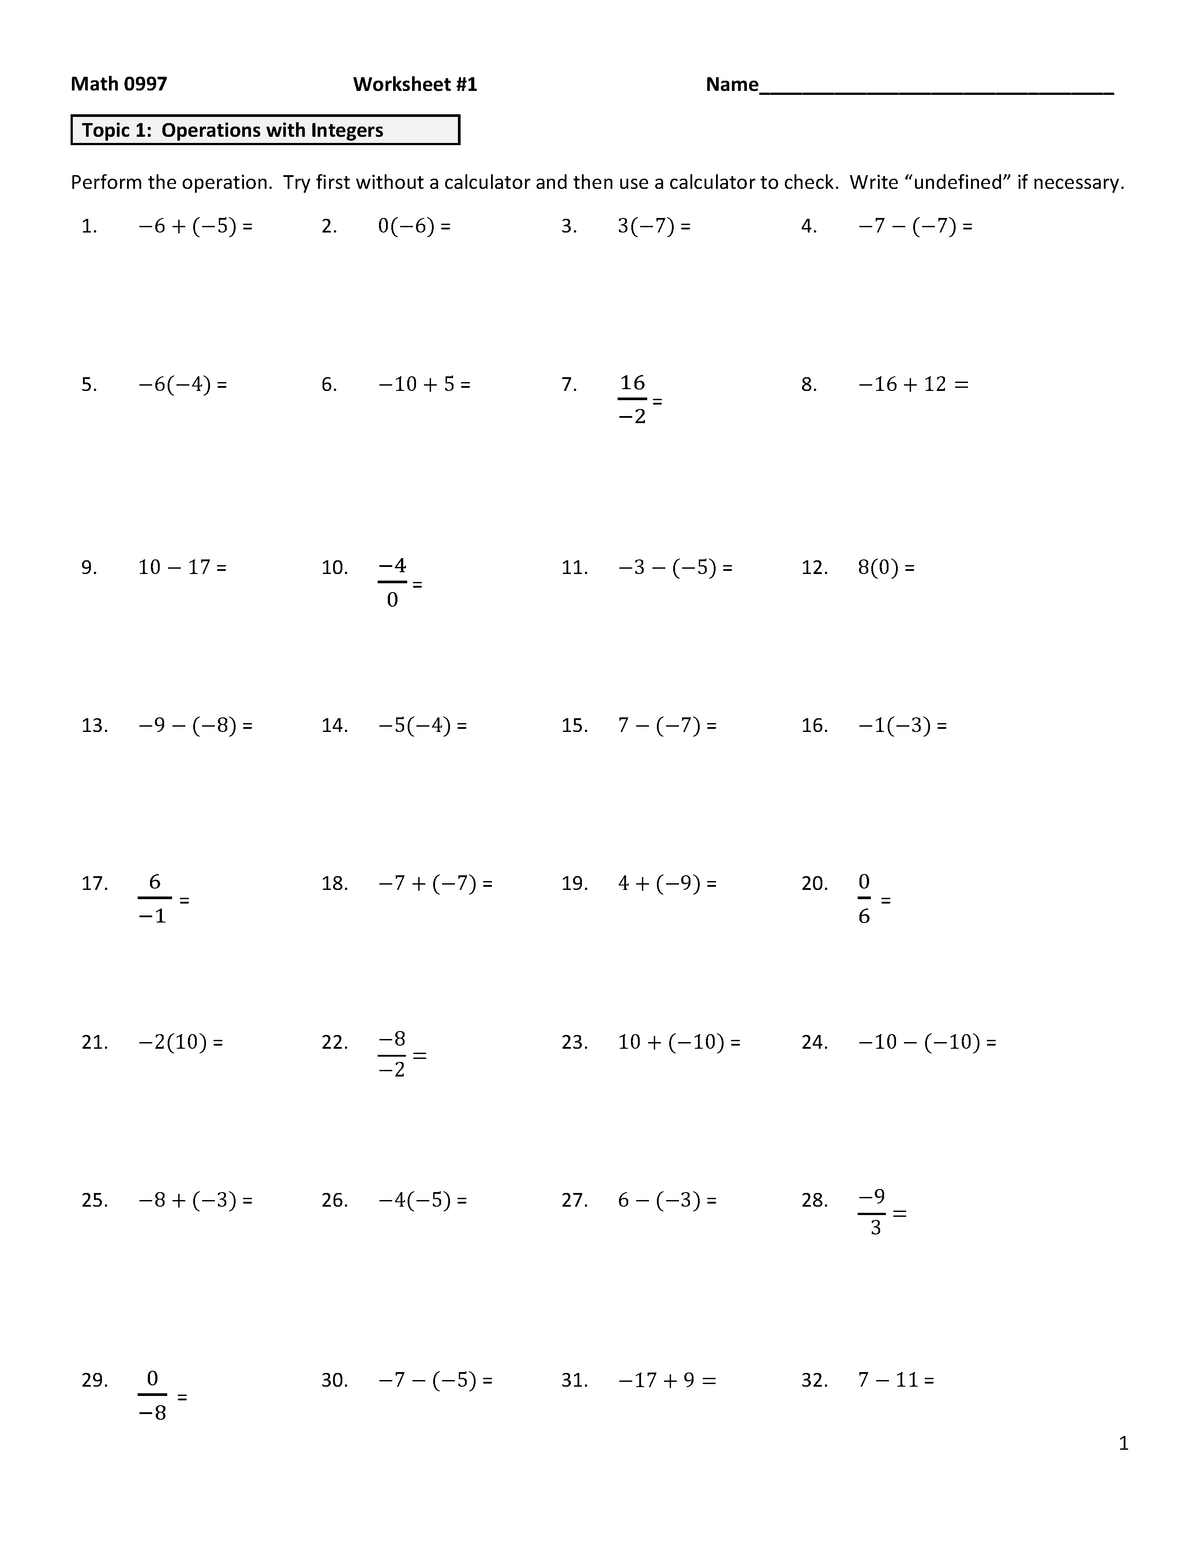 Math 0997 Homework 1 Support For Quantitative Reasoning Worksheet Math 0997 Topic 1 